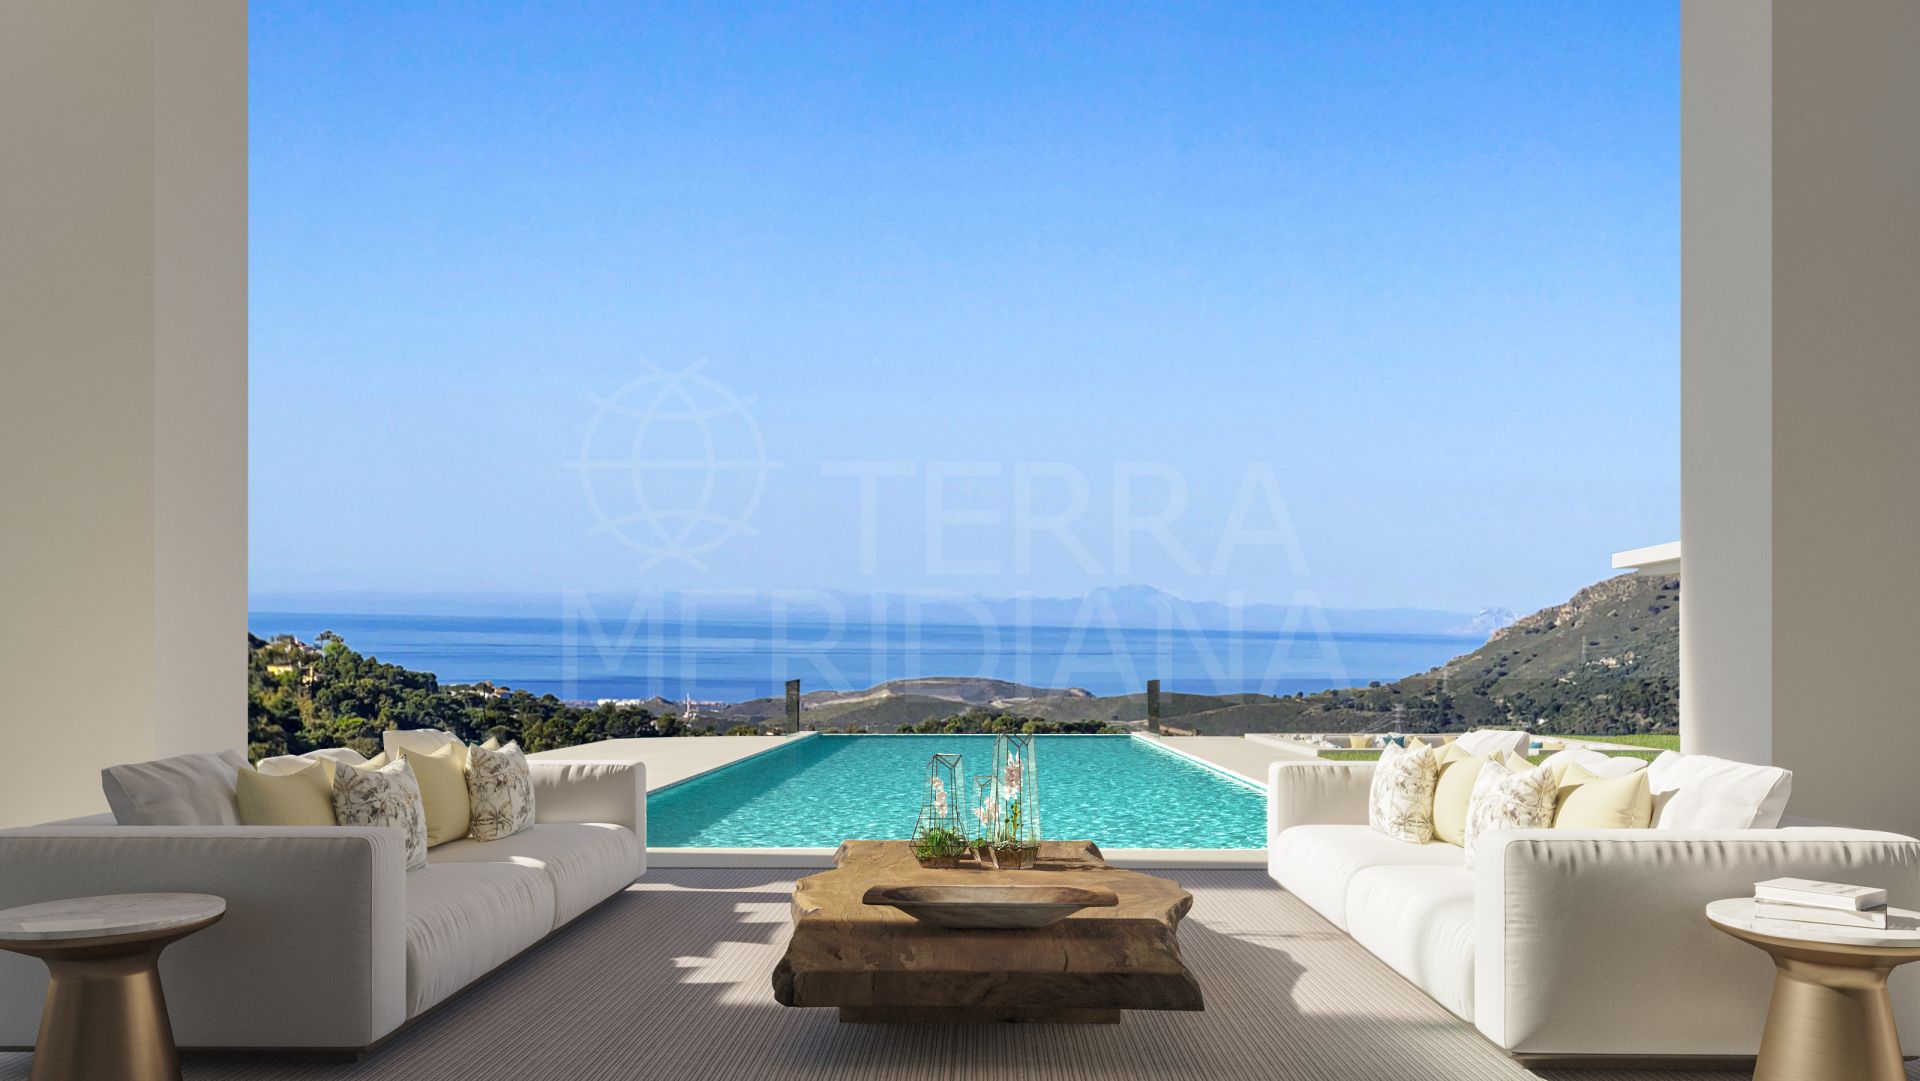 New villa redefining luxury living in an unrivalled setting for sale in La Zagaleta, Benahavis